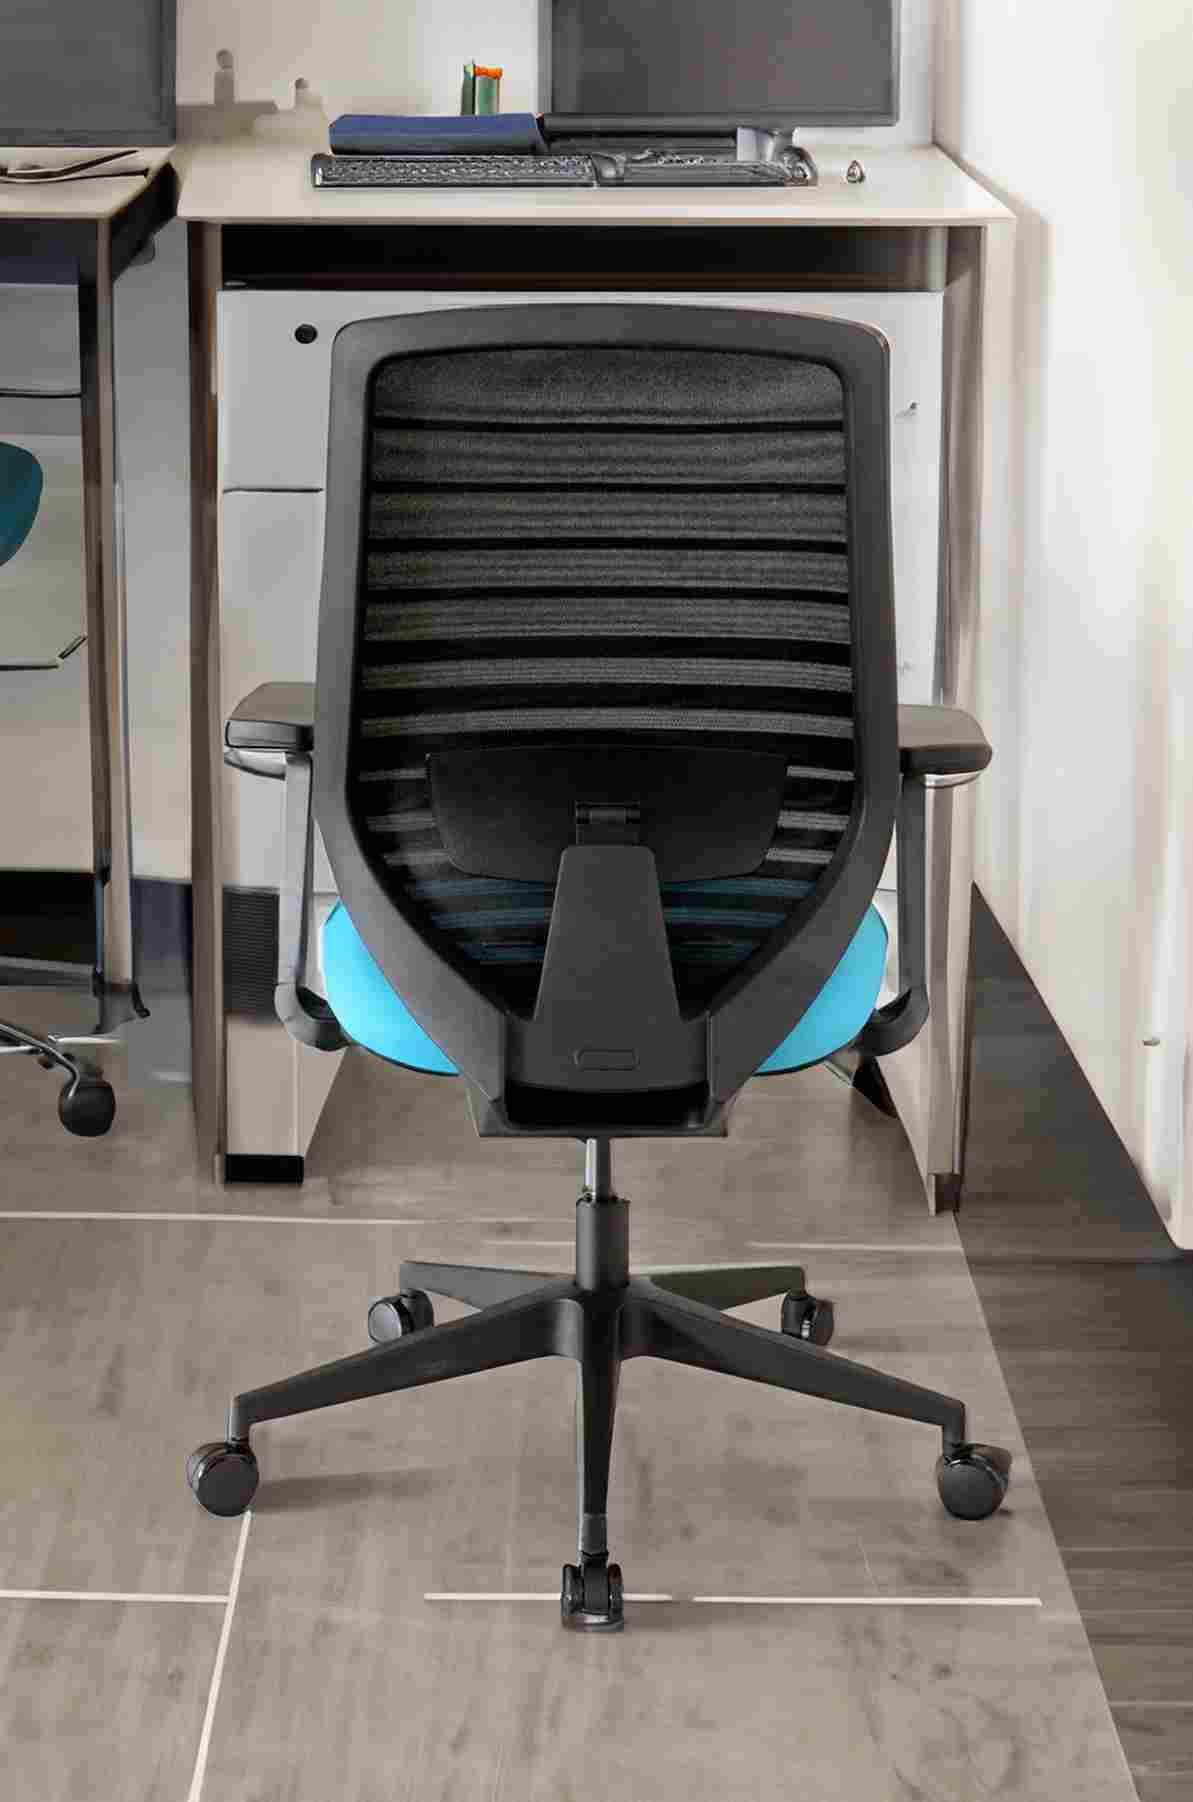 Fontana Office Chair